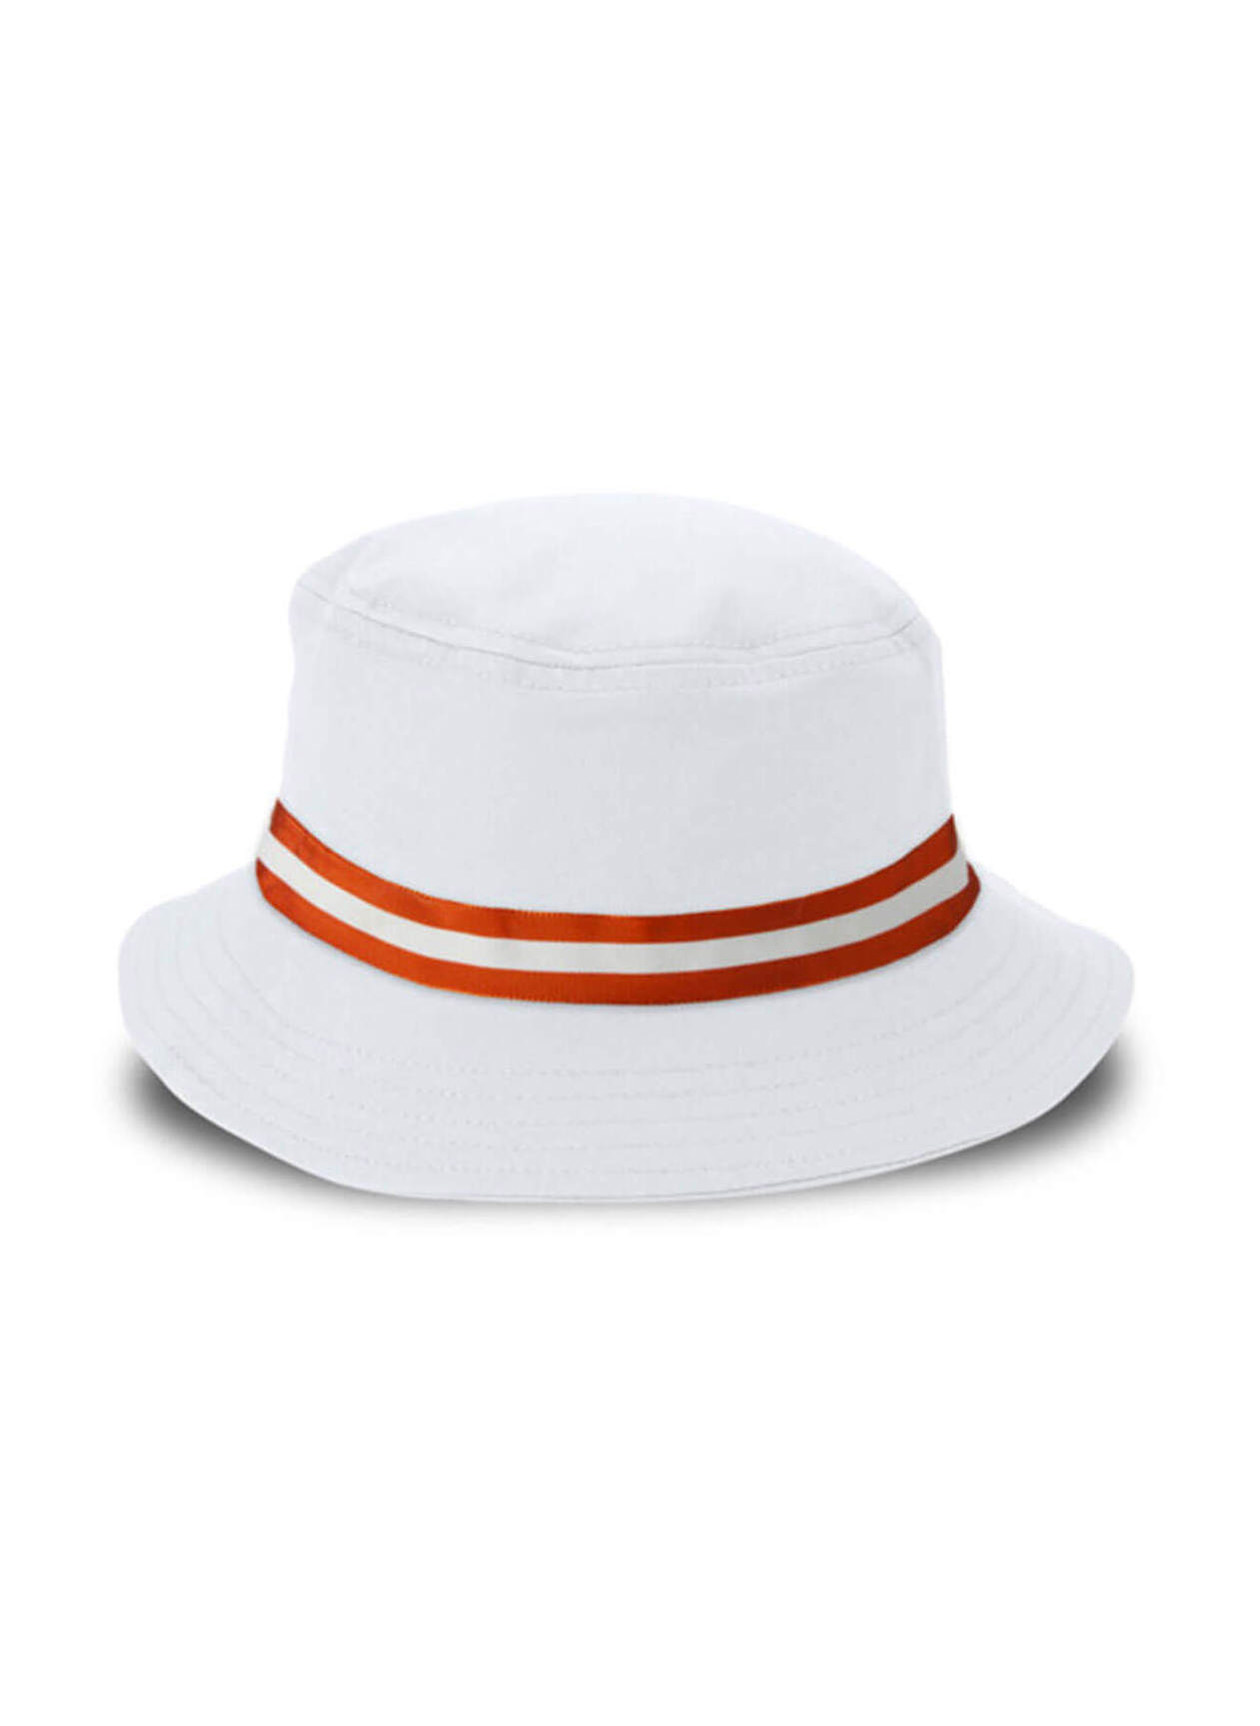 Imperial White / Orange The Oxford Bucket Hat